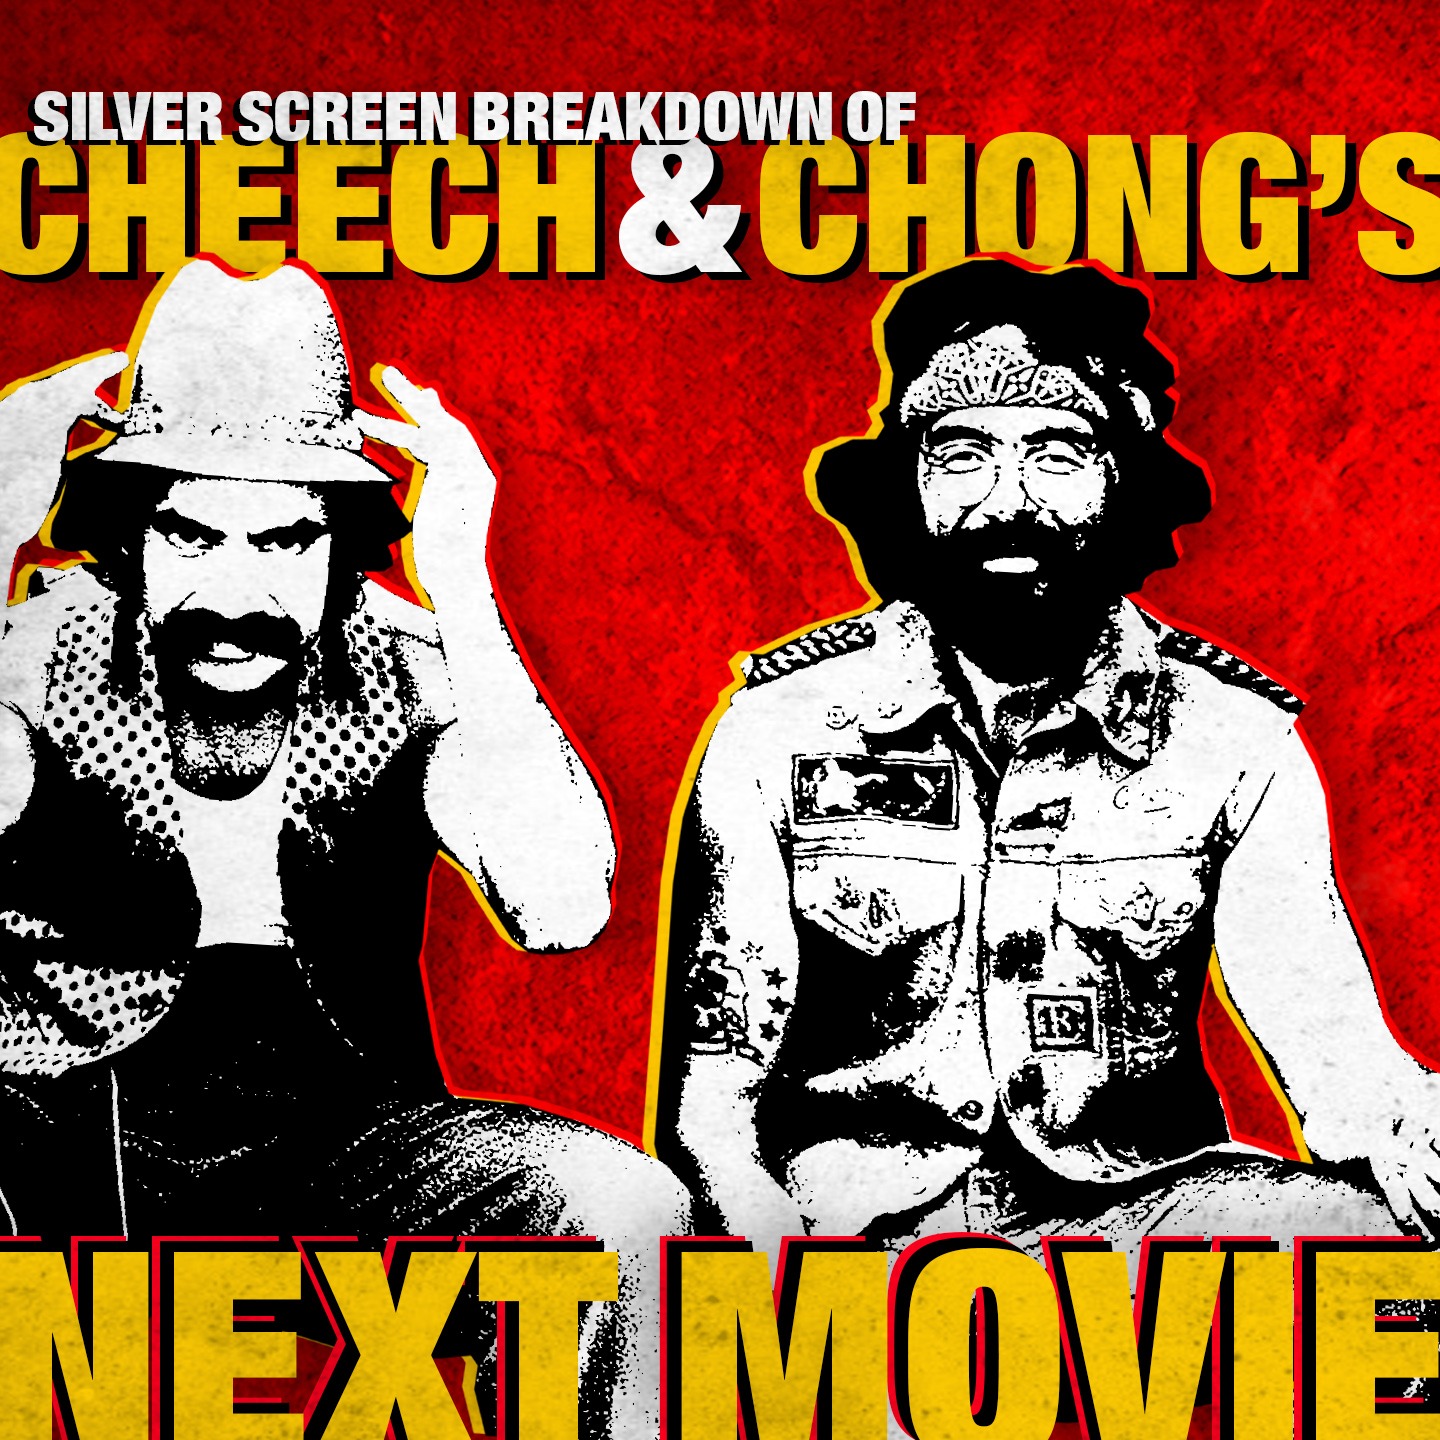 Cheech & Chong's Next Movie Film Breakdown Image